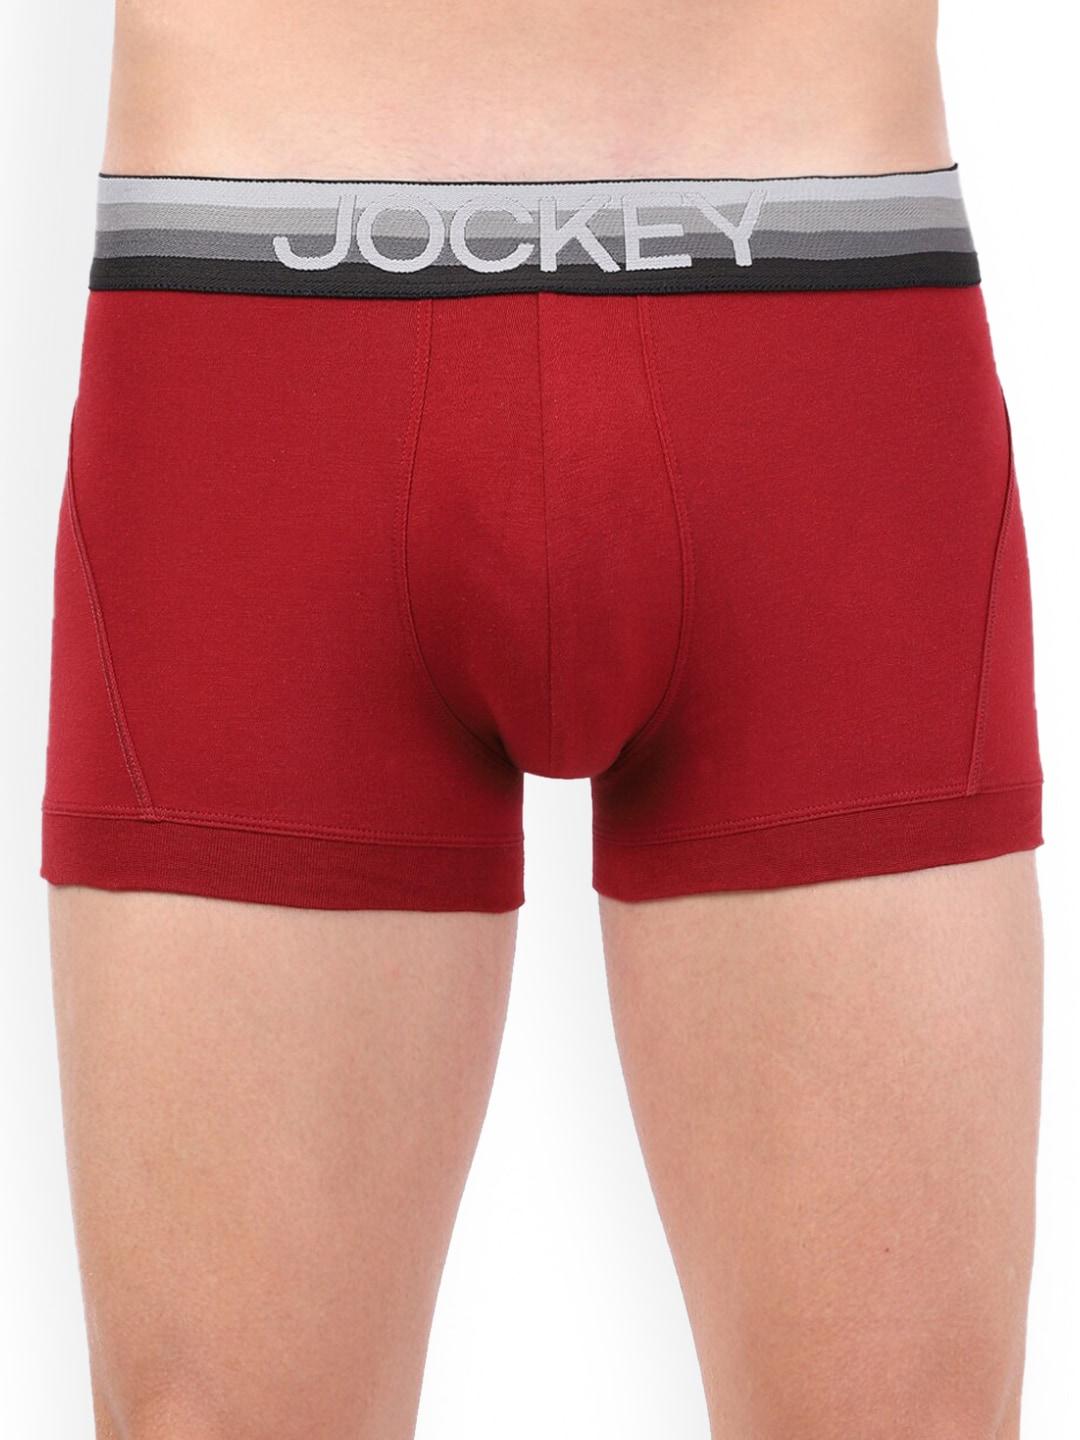 jockey-men-red-solid-cotton-trunk